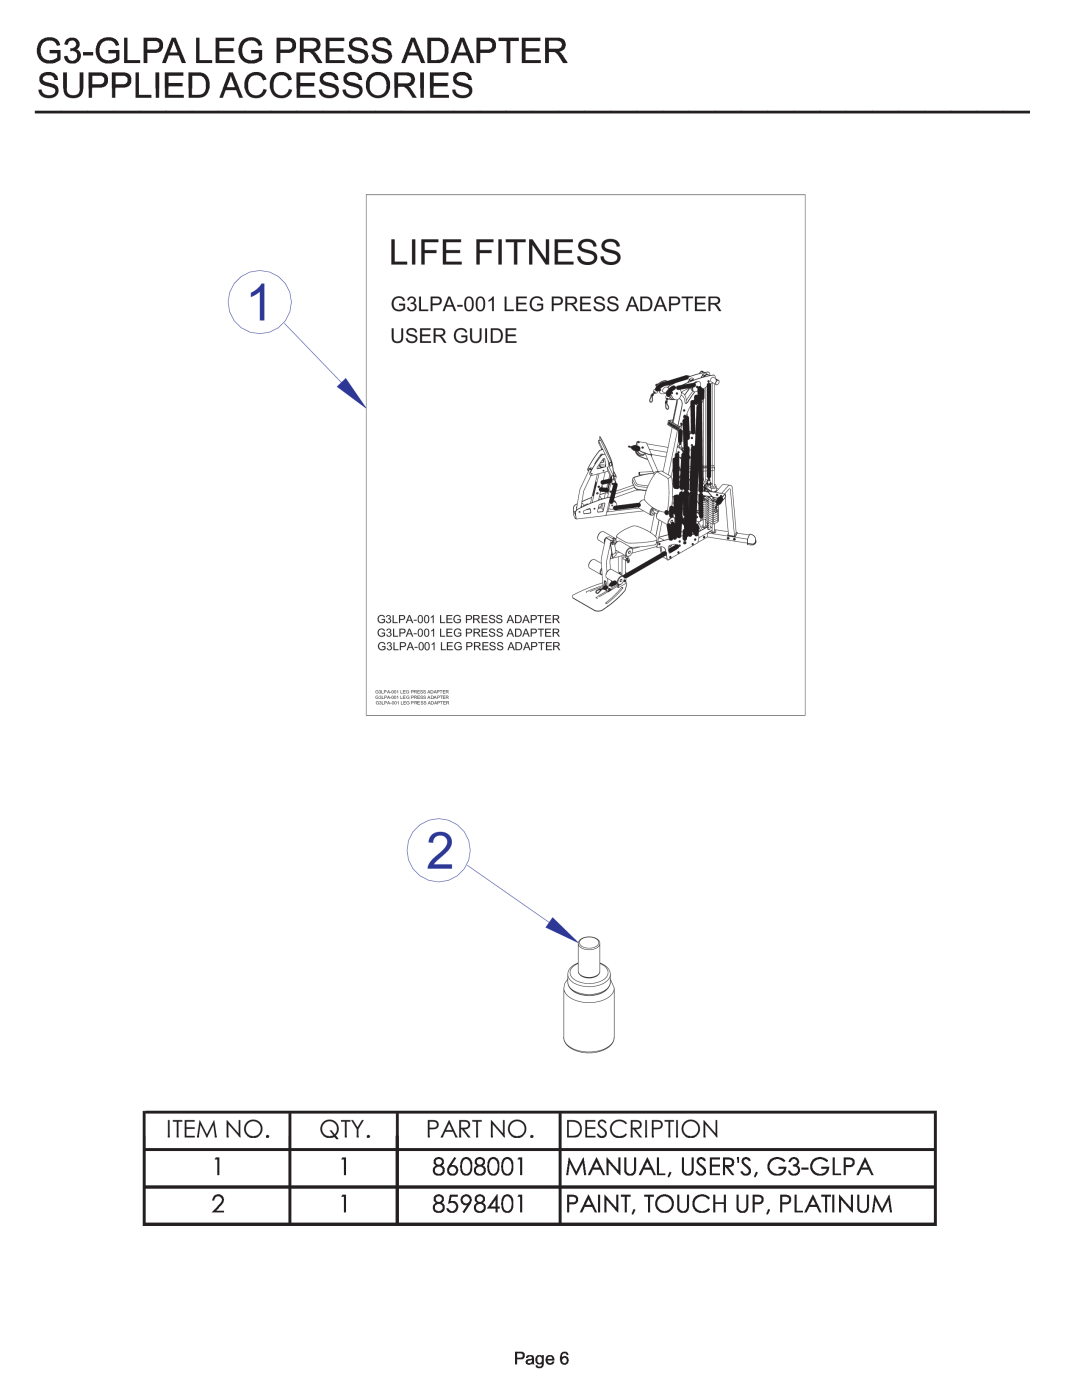 Life Fitness G3-GLPA-001 G3-GLPA LEG PRESS ADAPTER SUPPLIED ACCESSORIES, Life Fitness, Item No, Description, 8608001, Page 